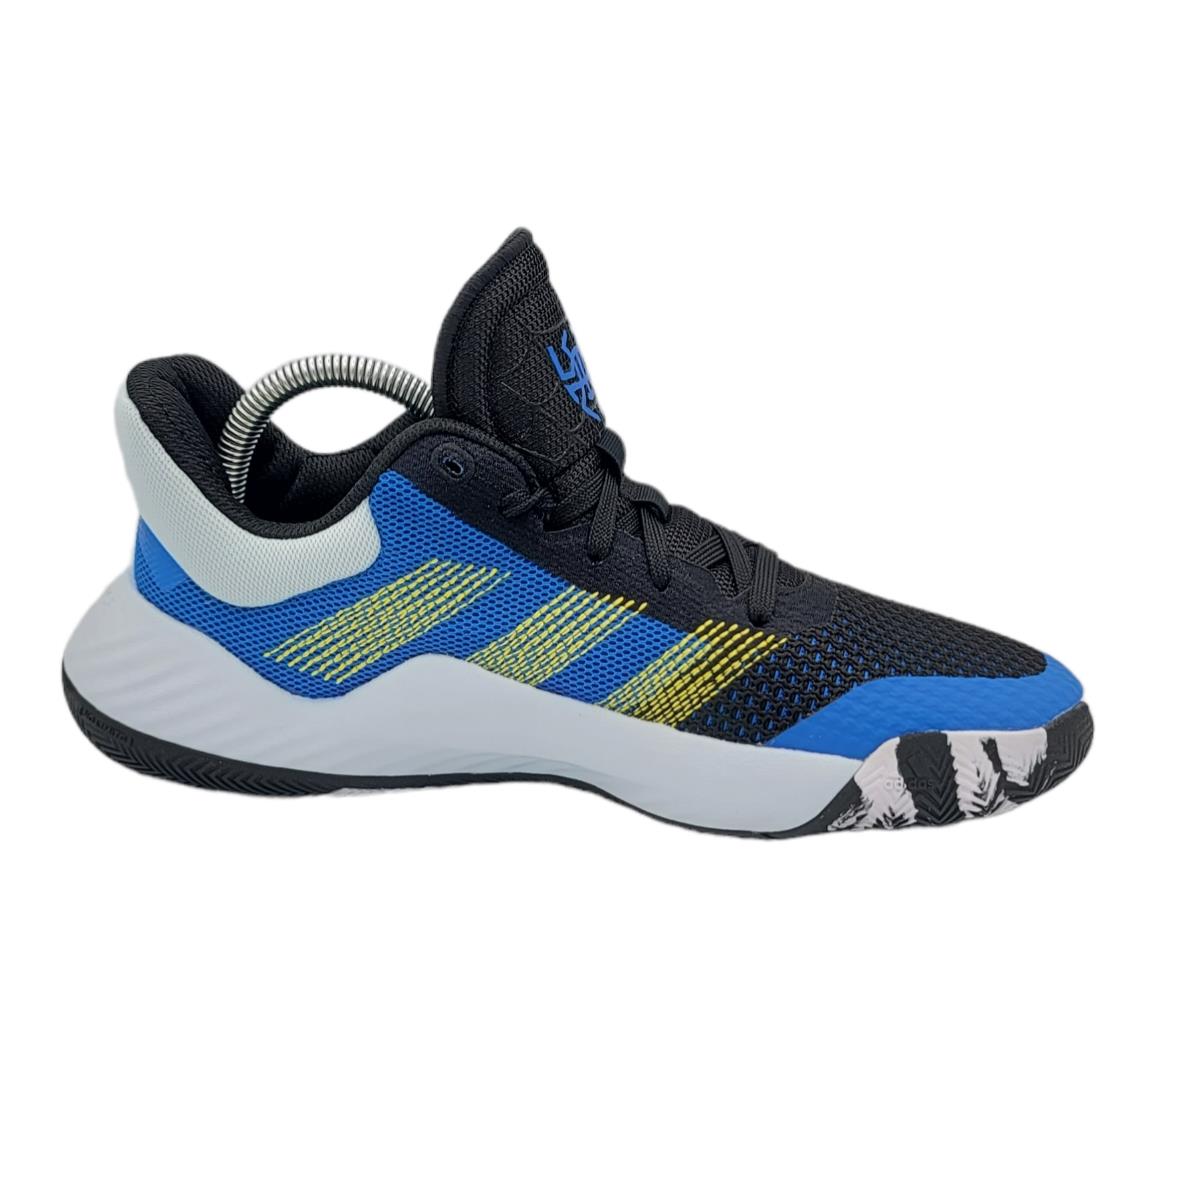 Adidas Basketball Womens Sz 8 Sneakers Black EG6564 Boys Size 6.5 - Black